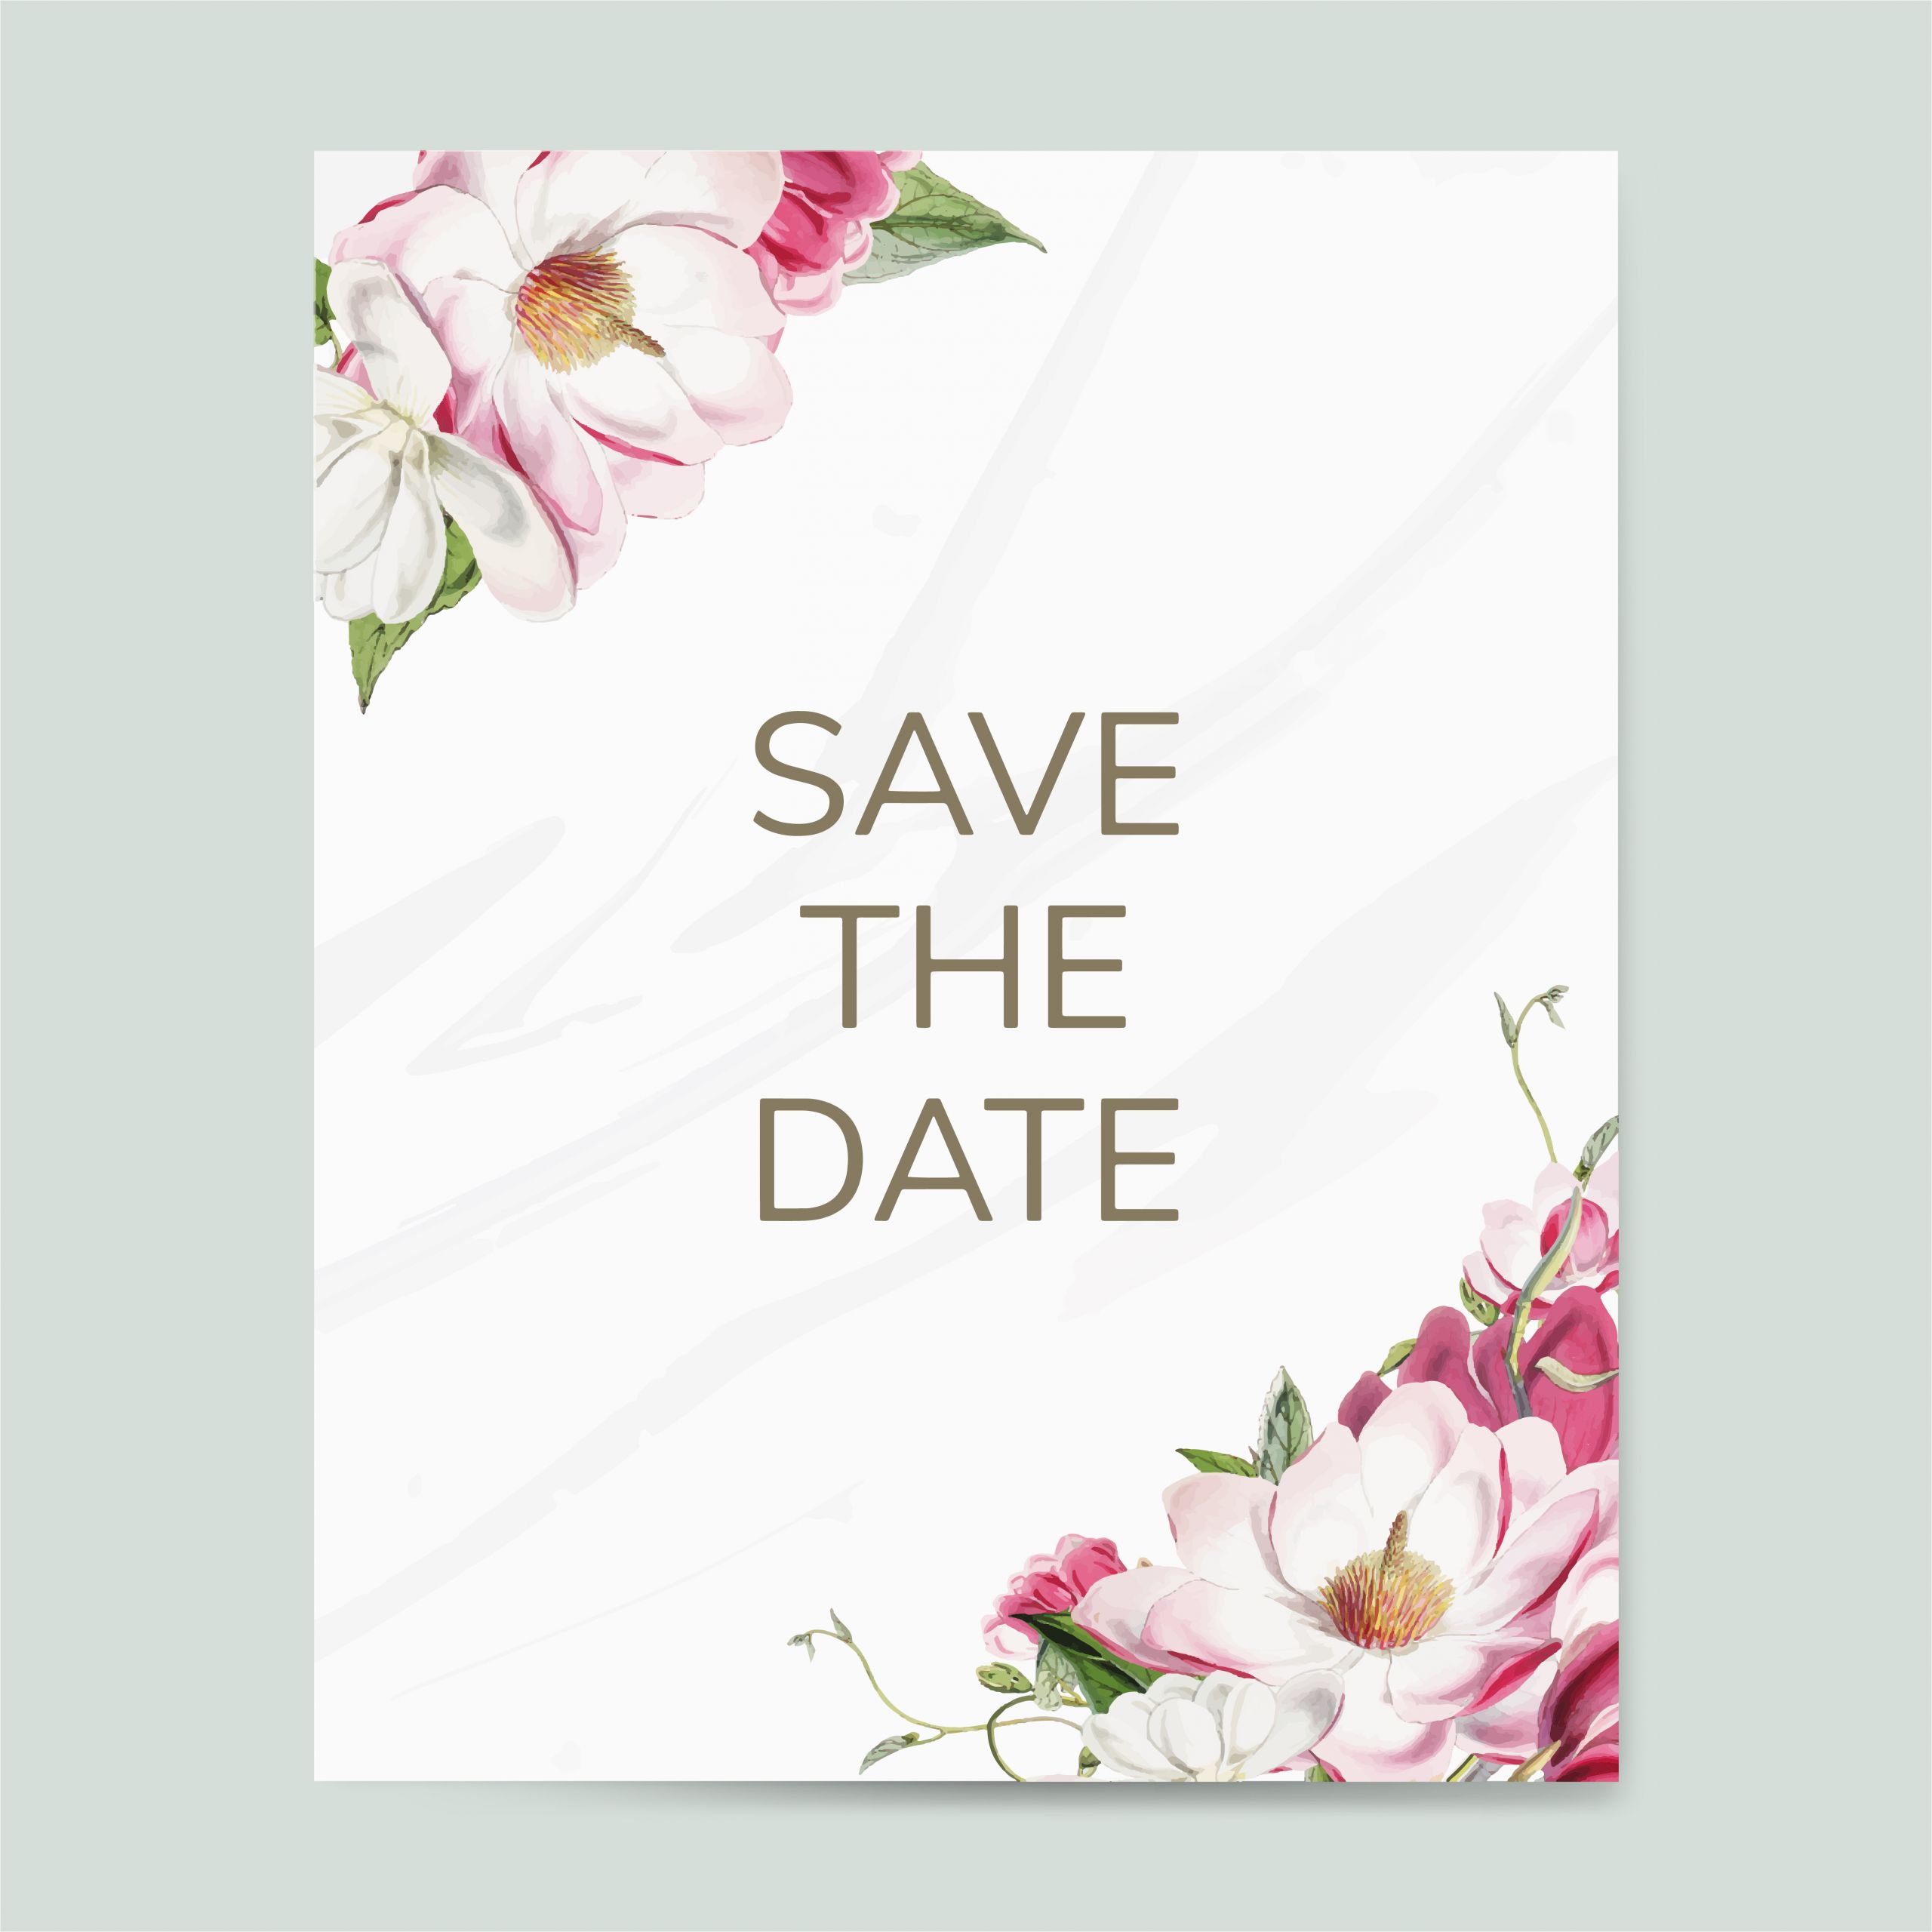 388841 save the date wedding invitation mockup vector